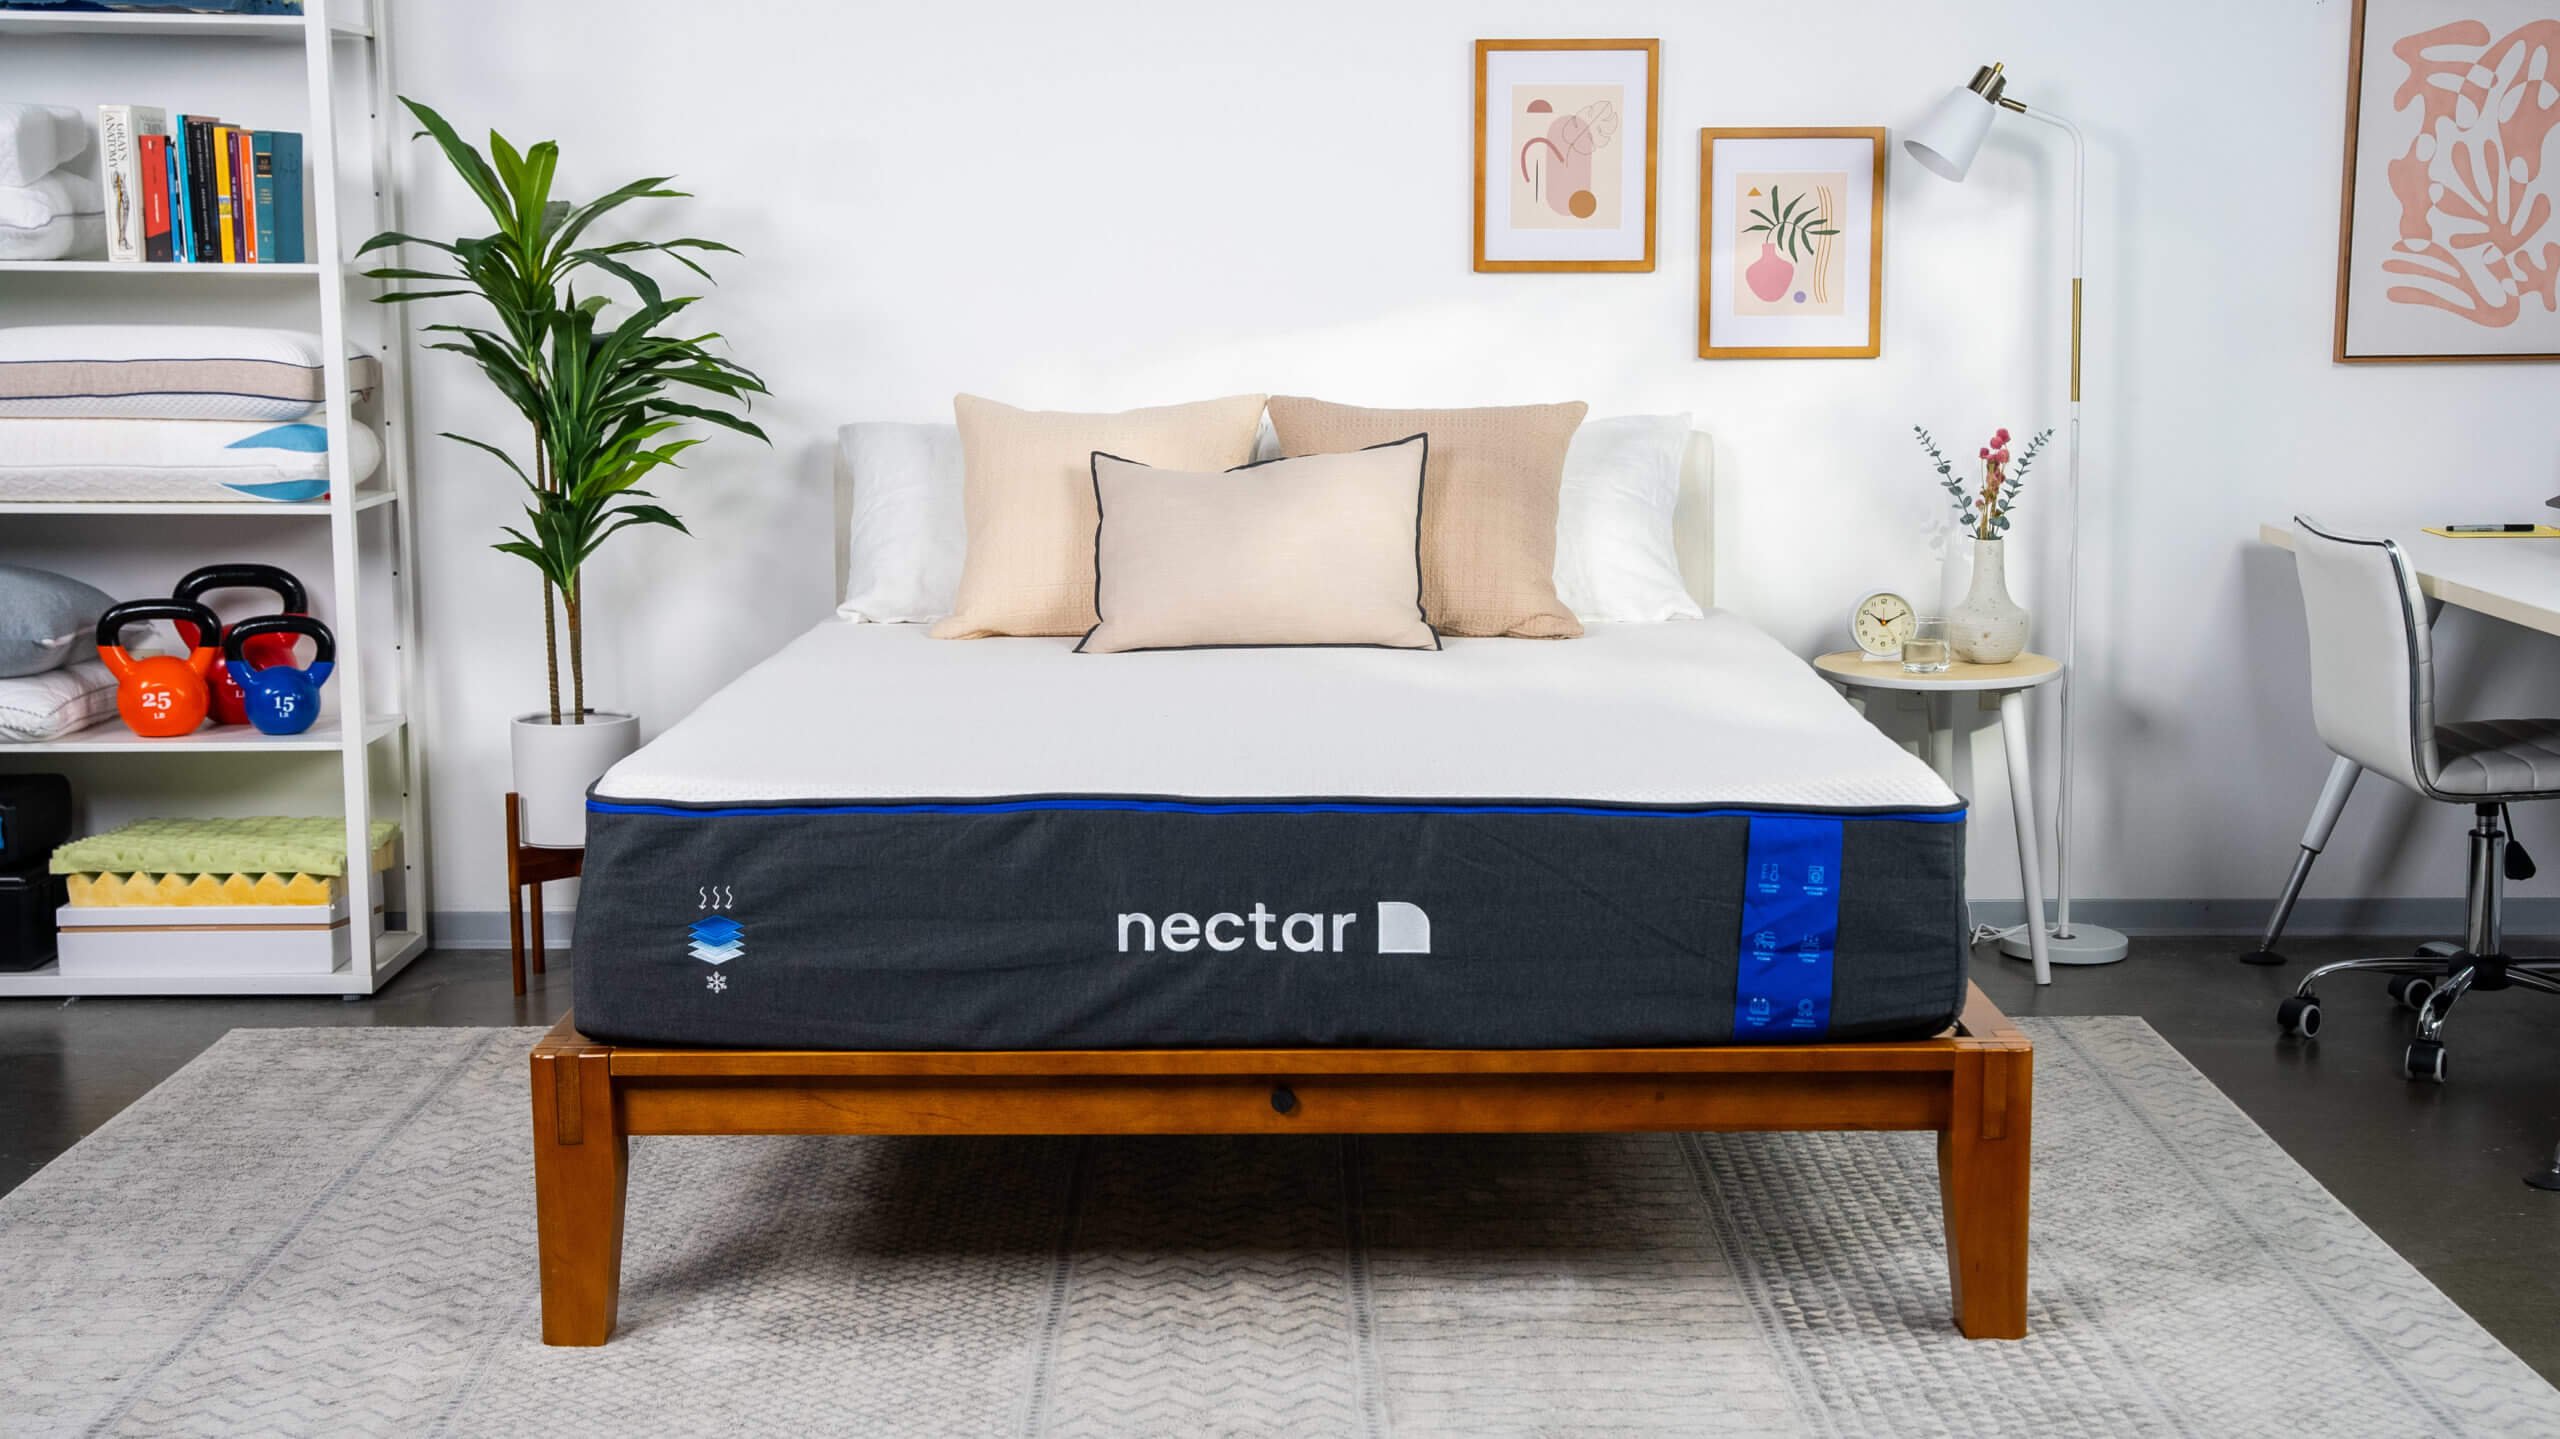 nectar mattress on bed